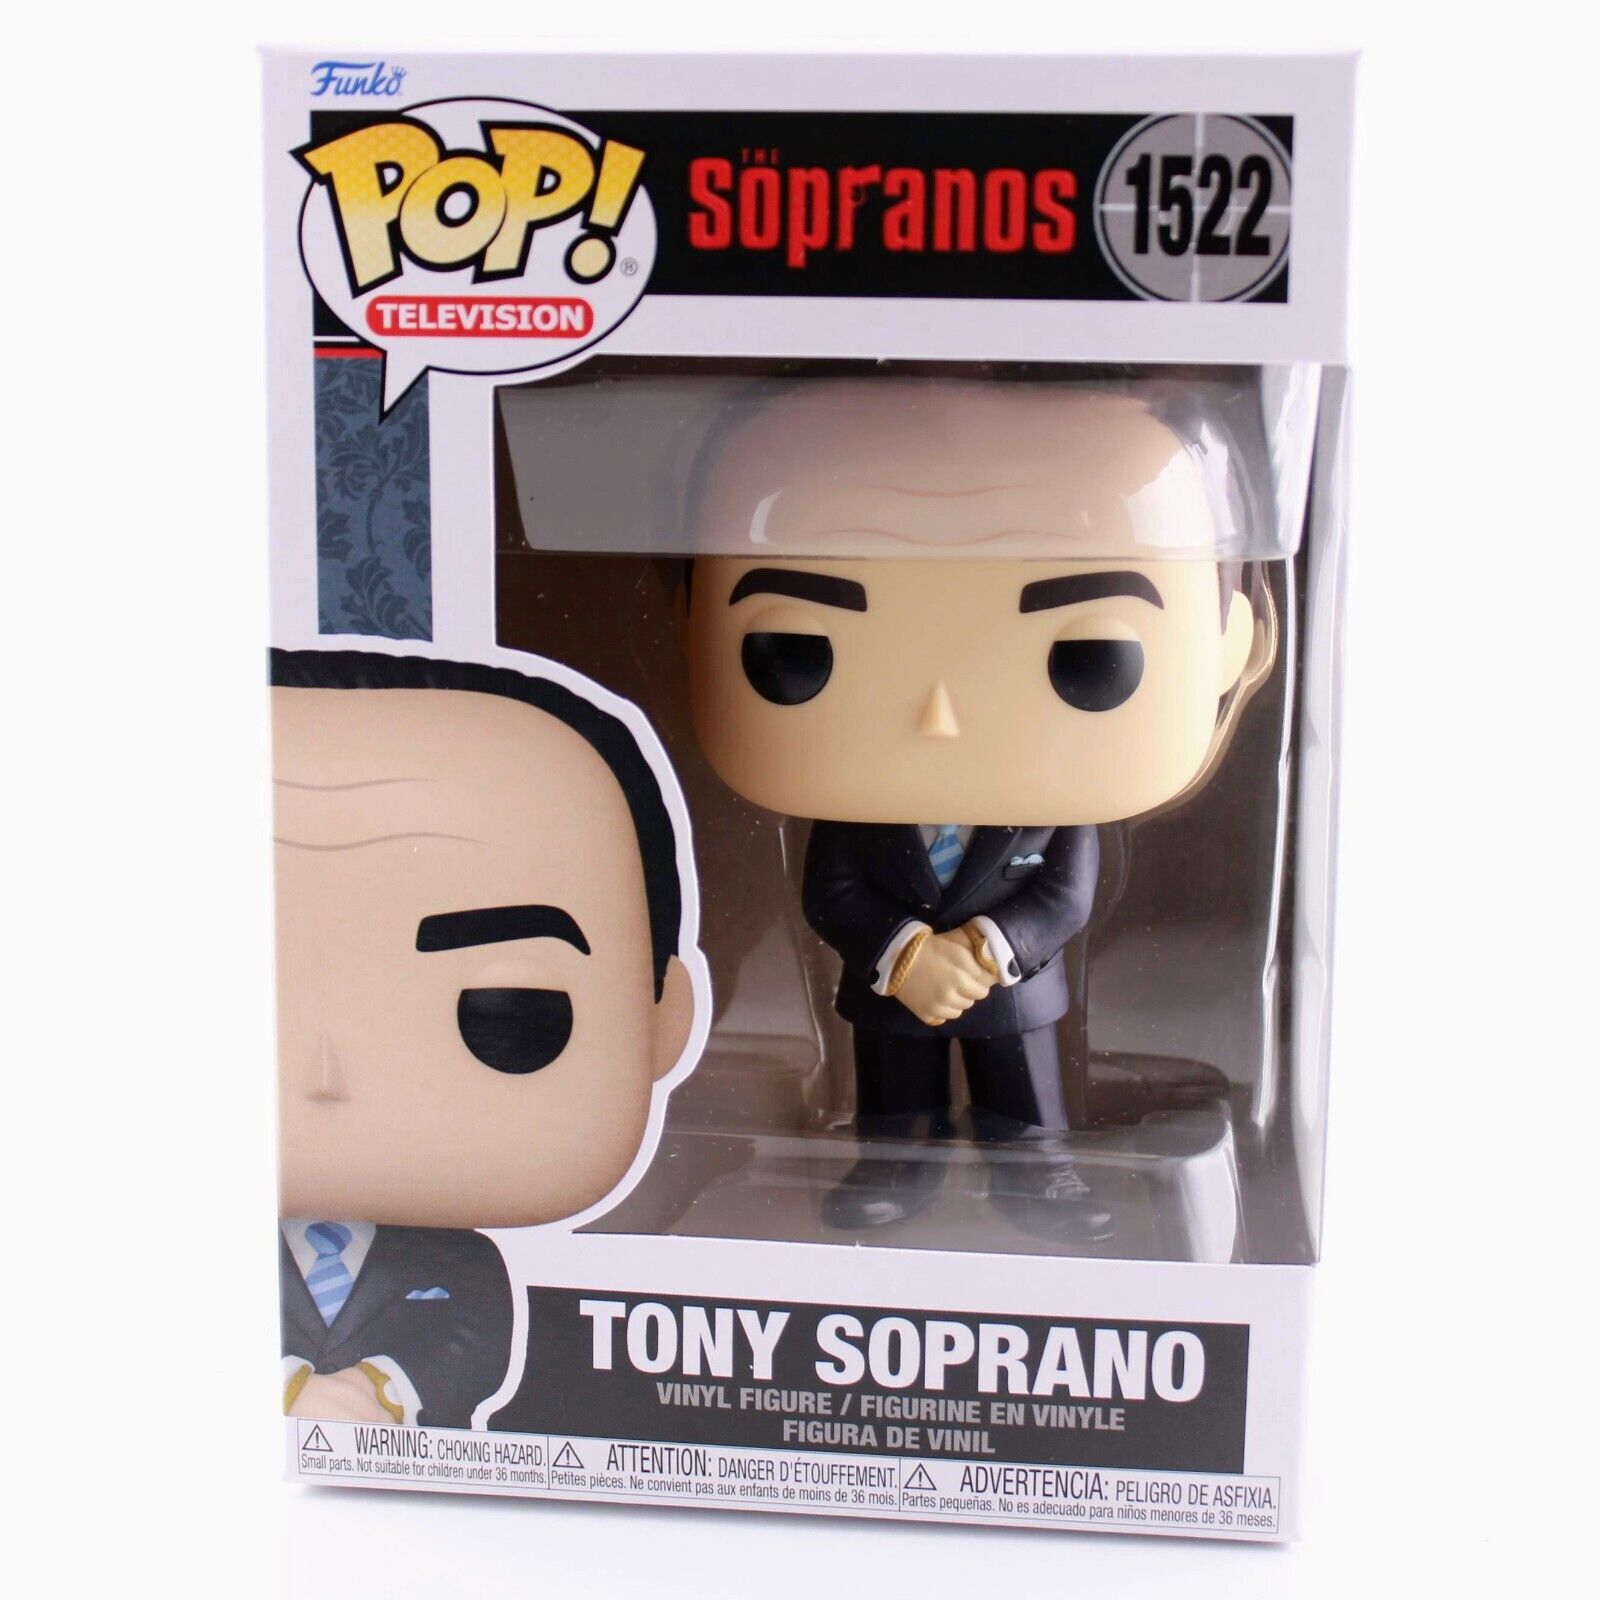 Funko Pop The Sopranos - Tony Soprano - Vinyl Figure # 1522